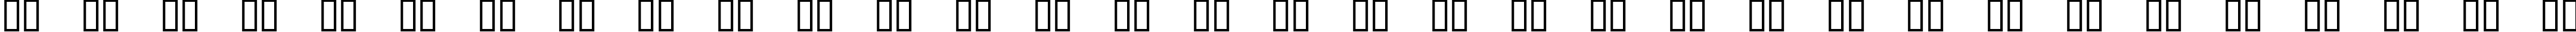 Пример написания русского алфавита шрифтом xspiralmental